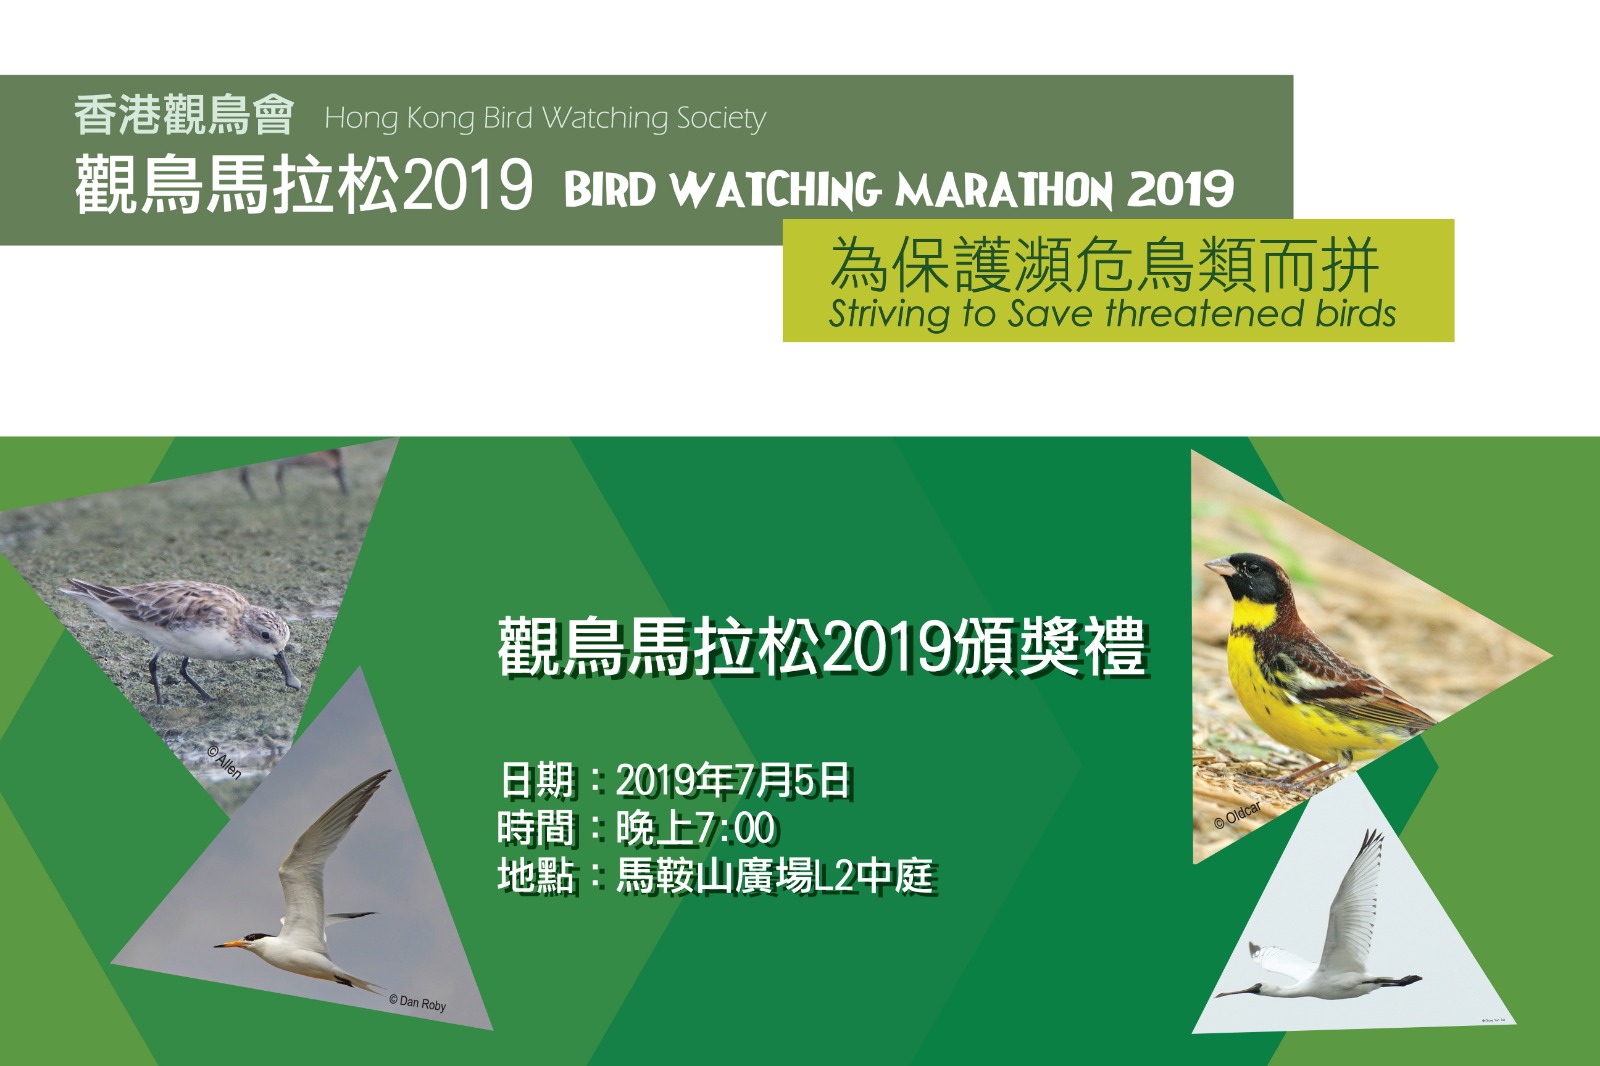 Hong Kong Bird Watching Marathon 2019 prizes presentation ceremony